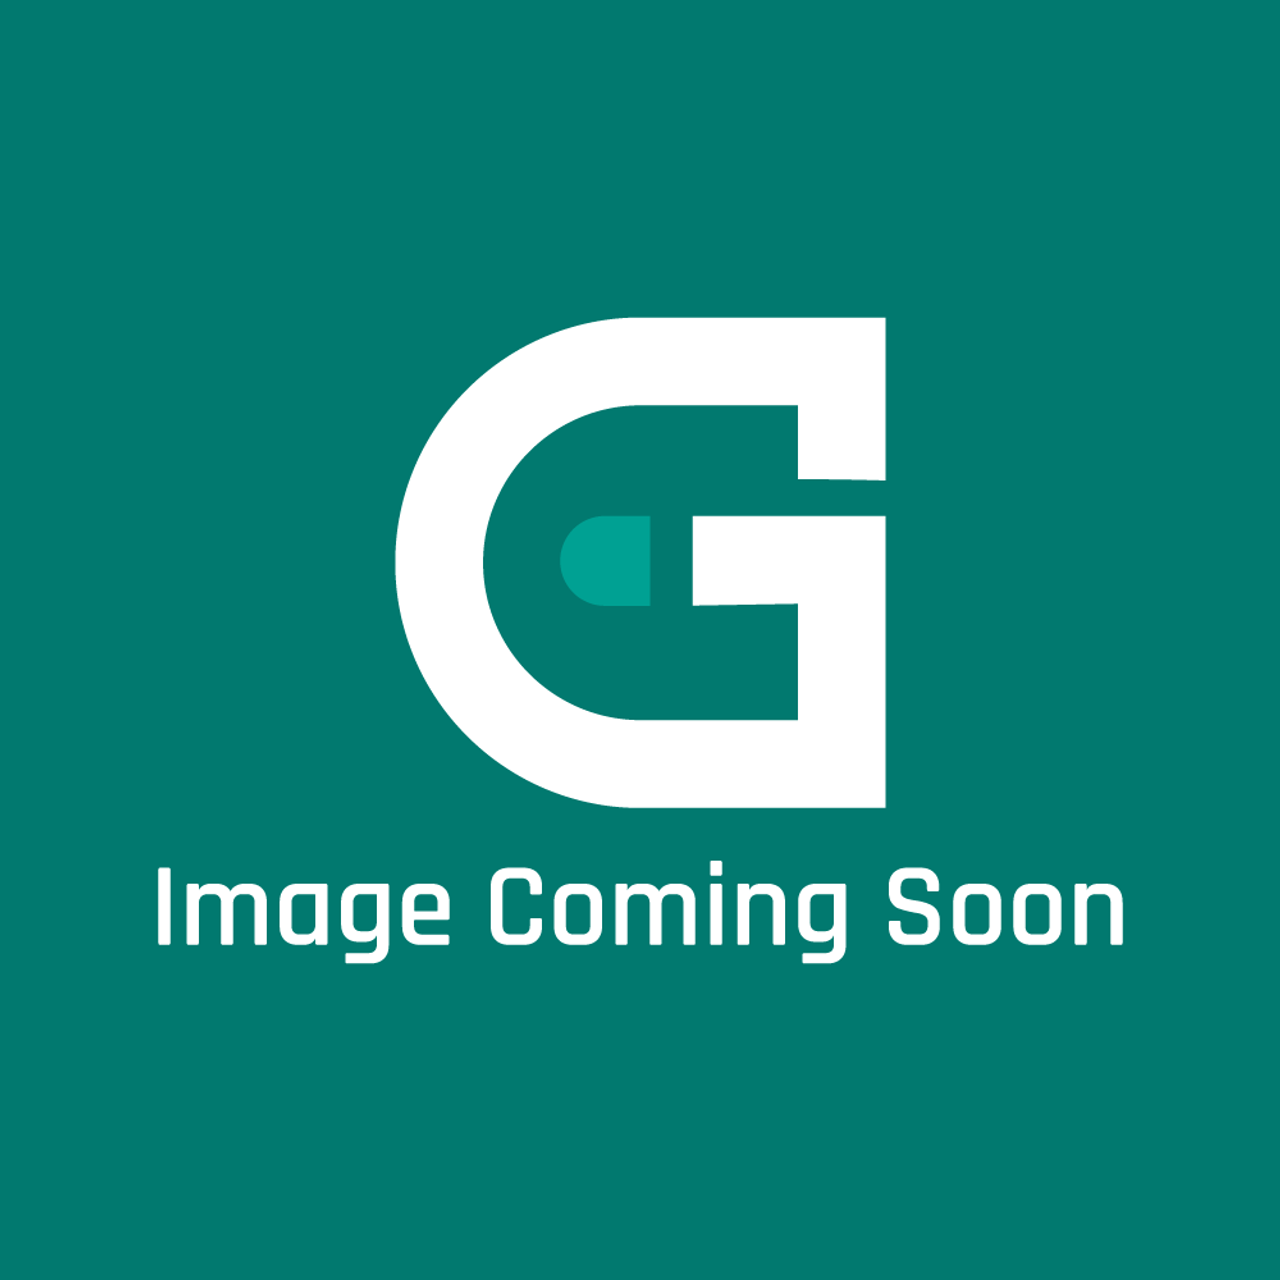 AGA Marvel R2150 - Retng Bar 10Mm Dia X230 S/S310 - Image Coming Soon!